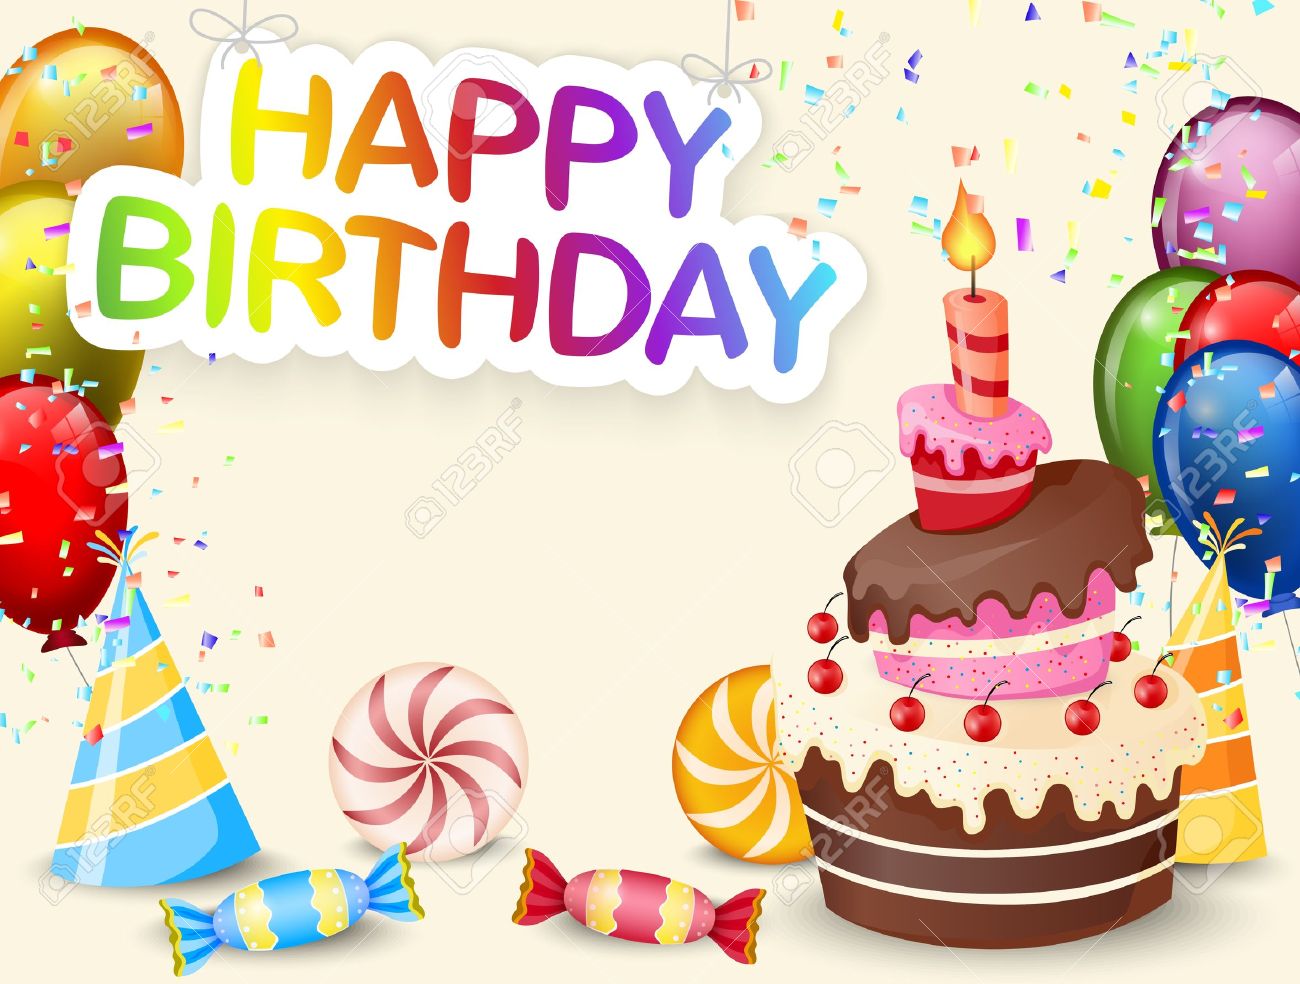 35858776-Birthday-background-with-birthday-cake-cartoon-Stock-Photo.jpg